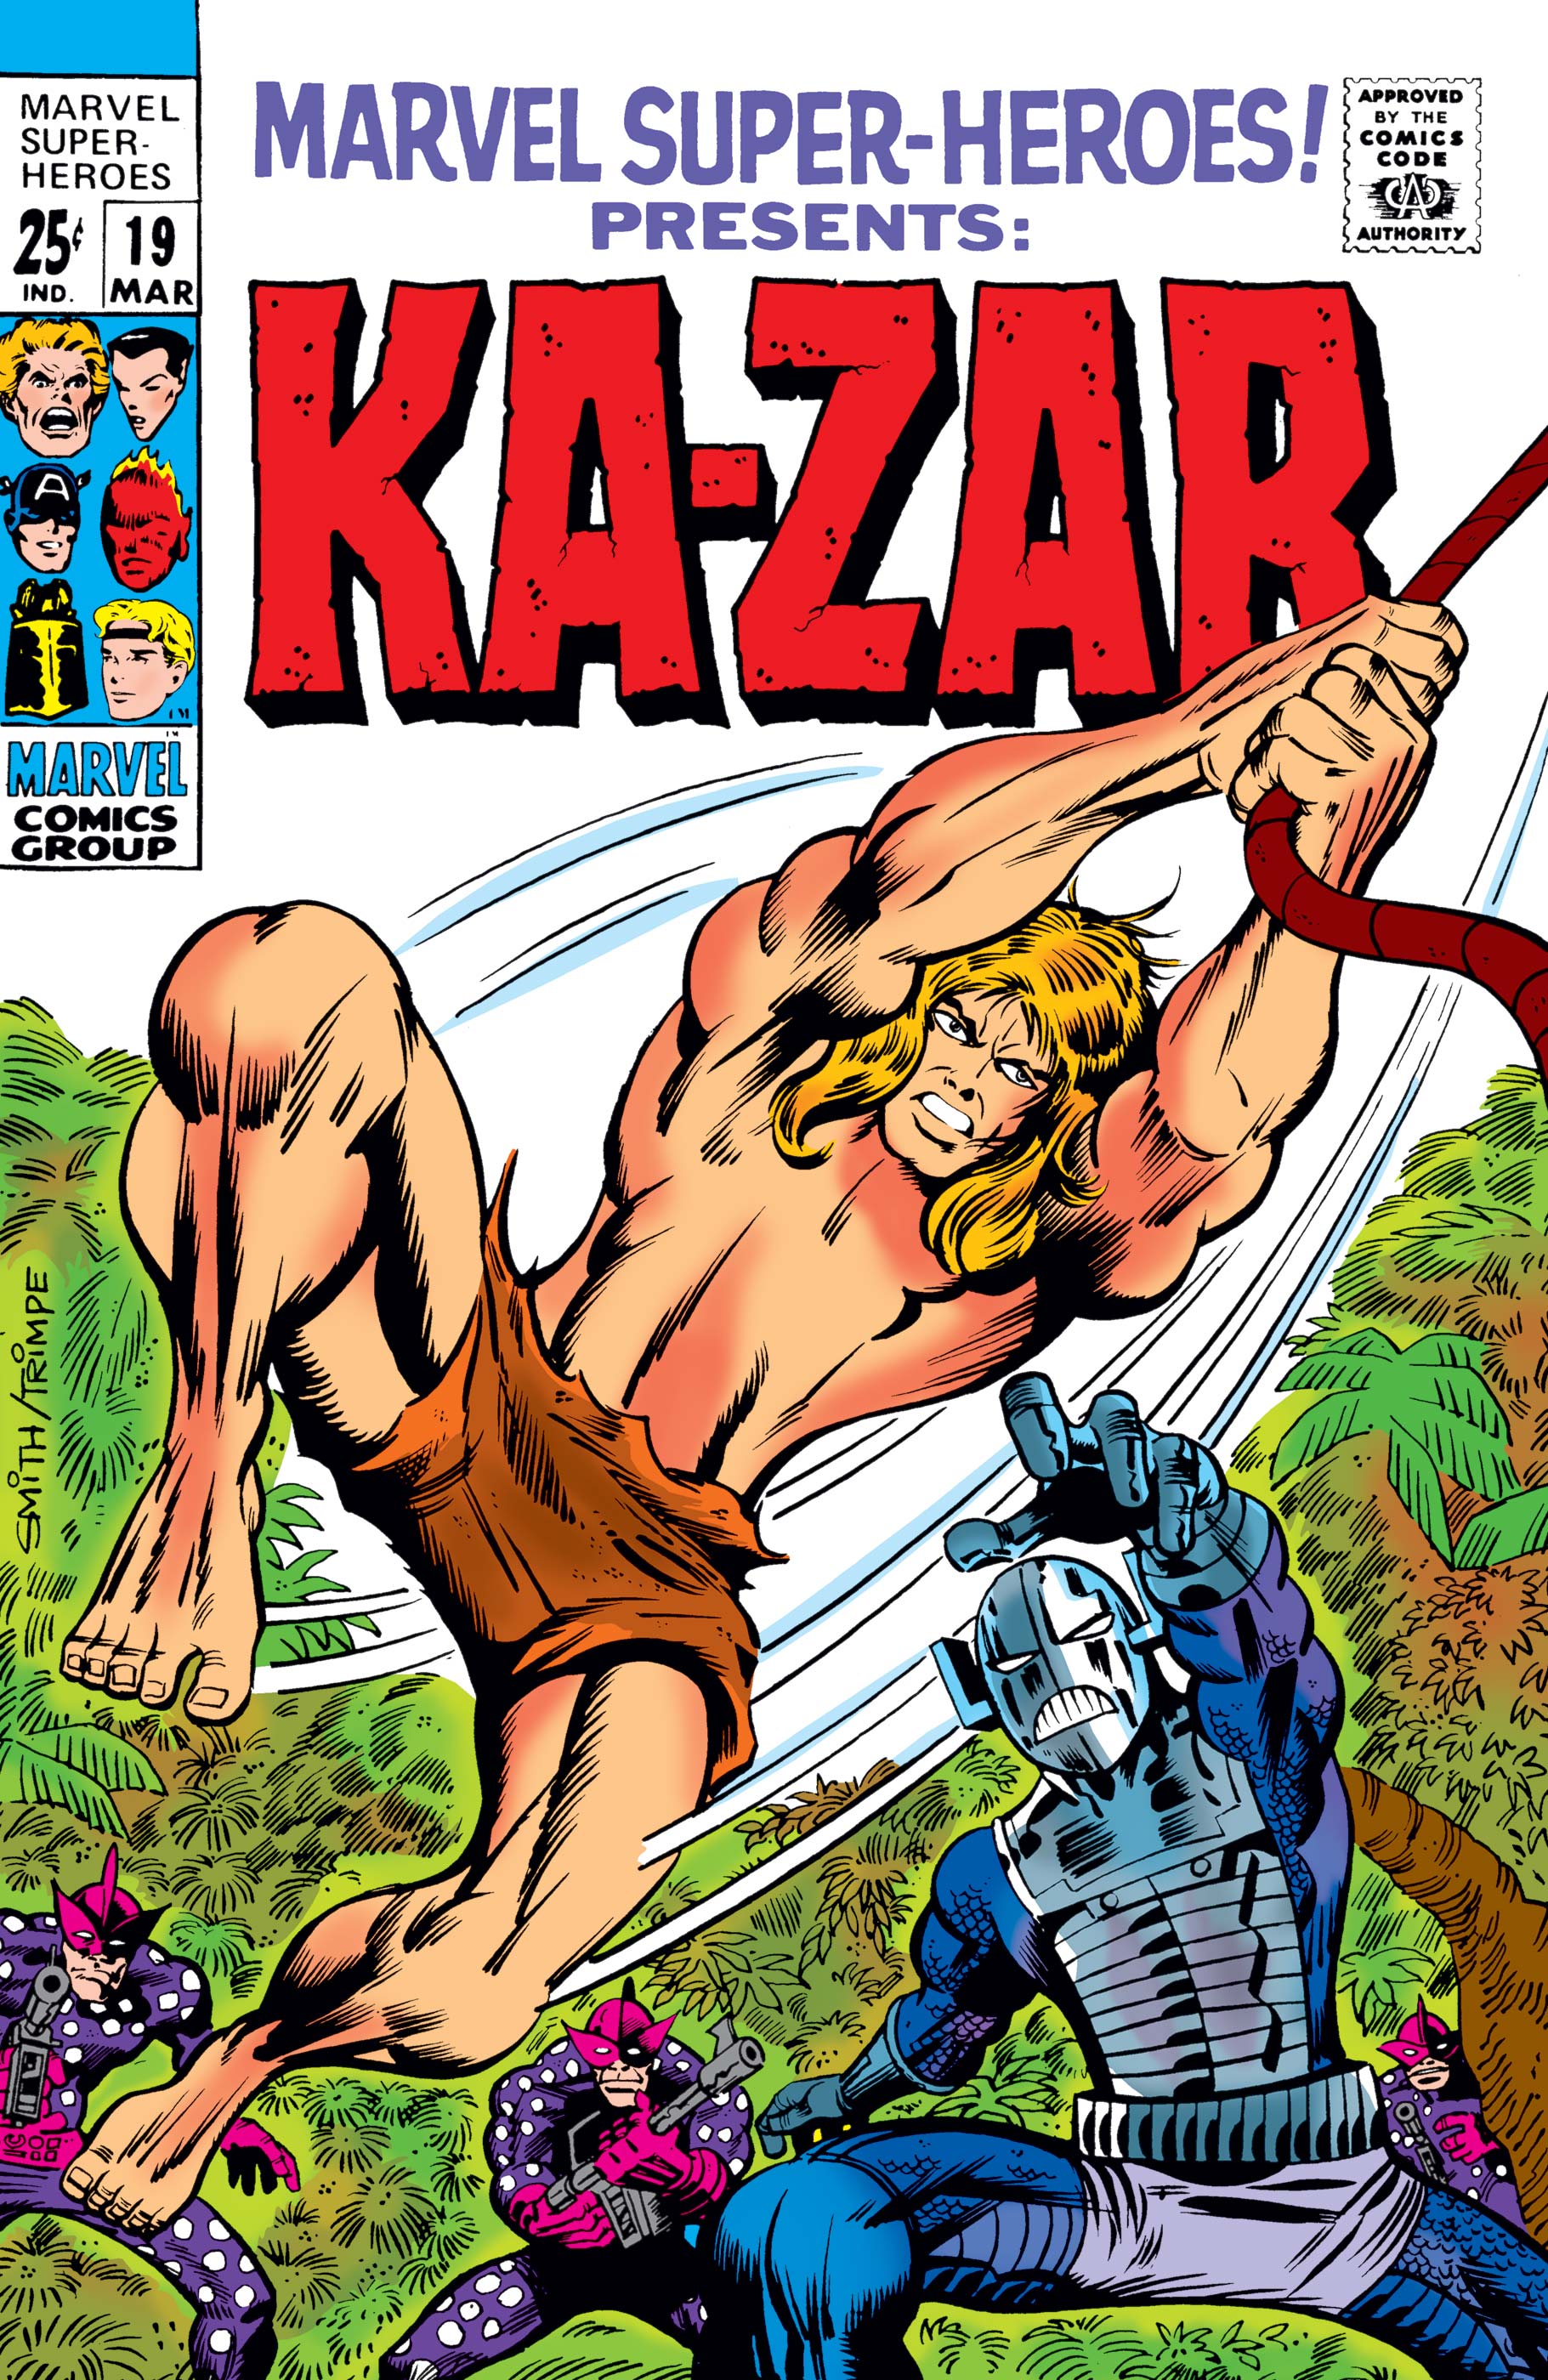 Marvel Super-Heroes (1967) #19